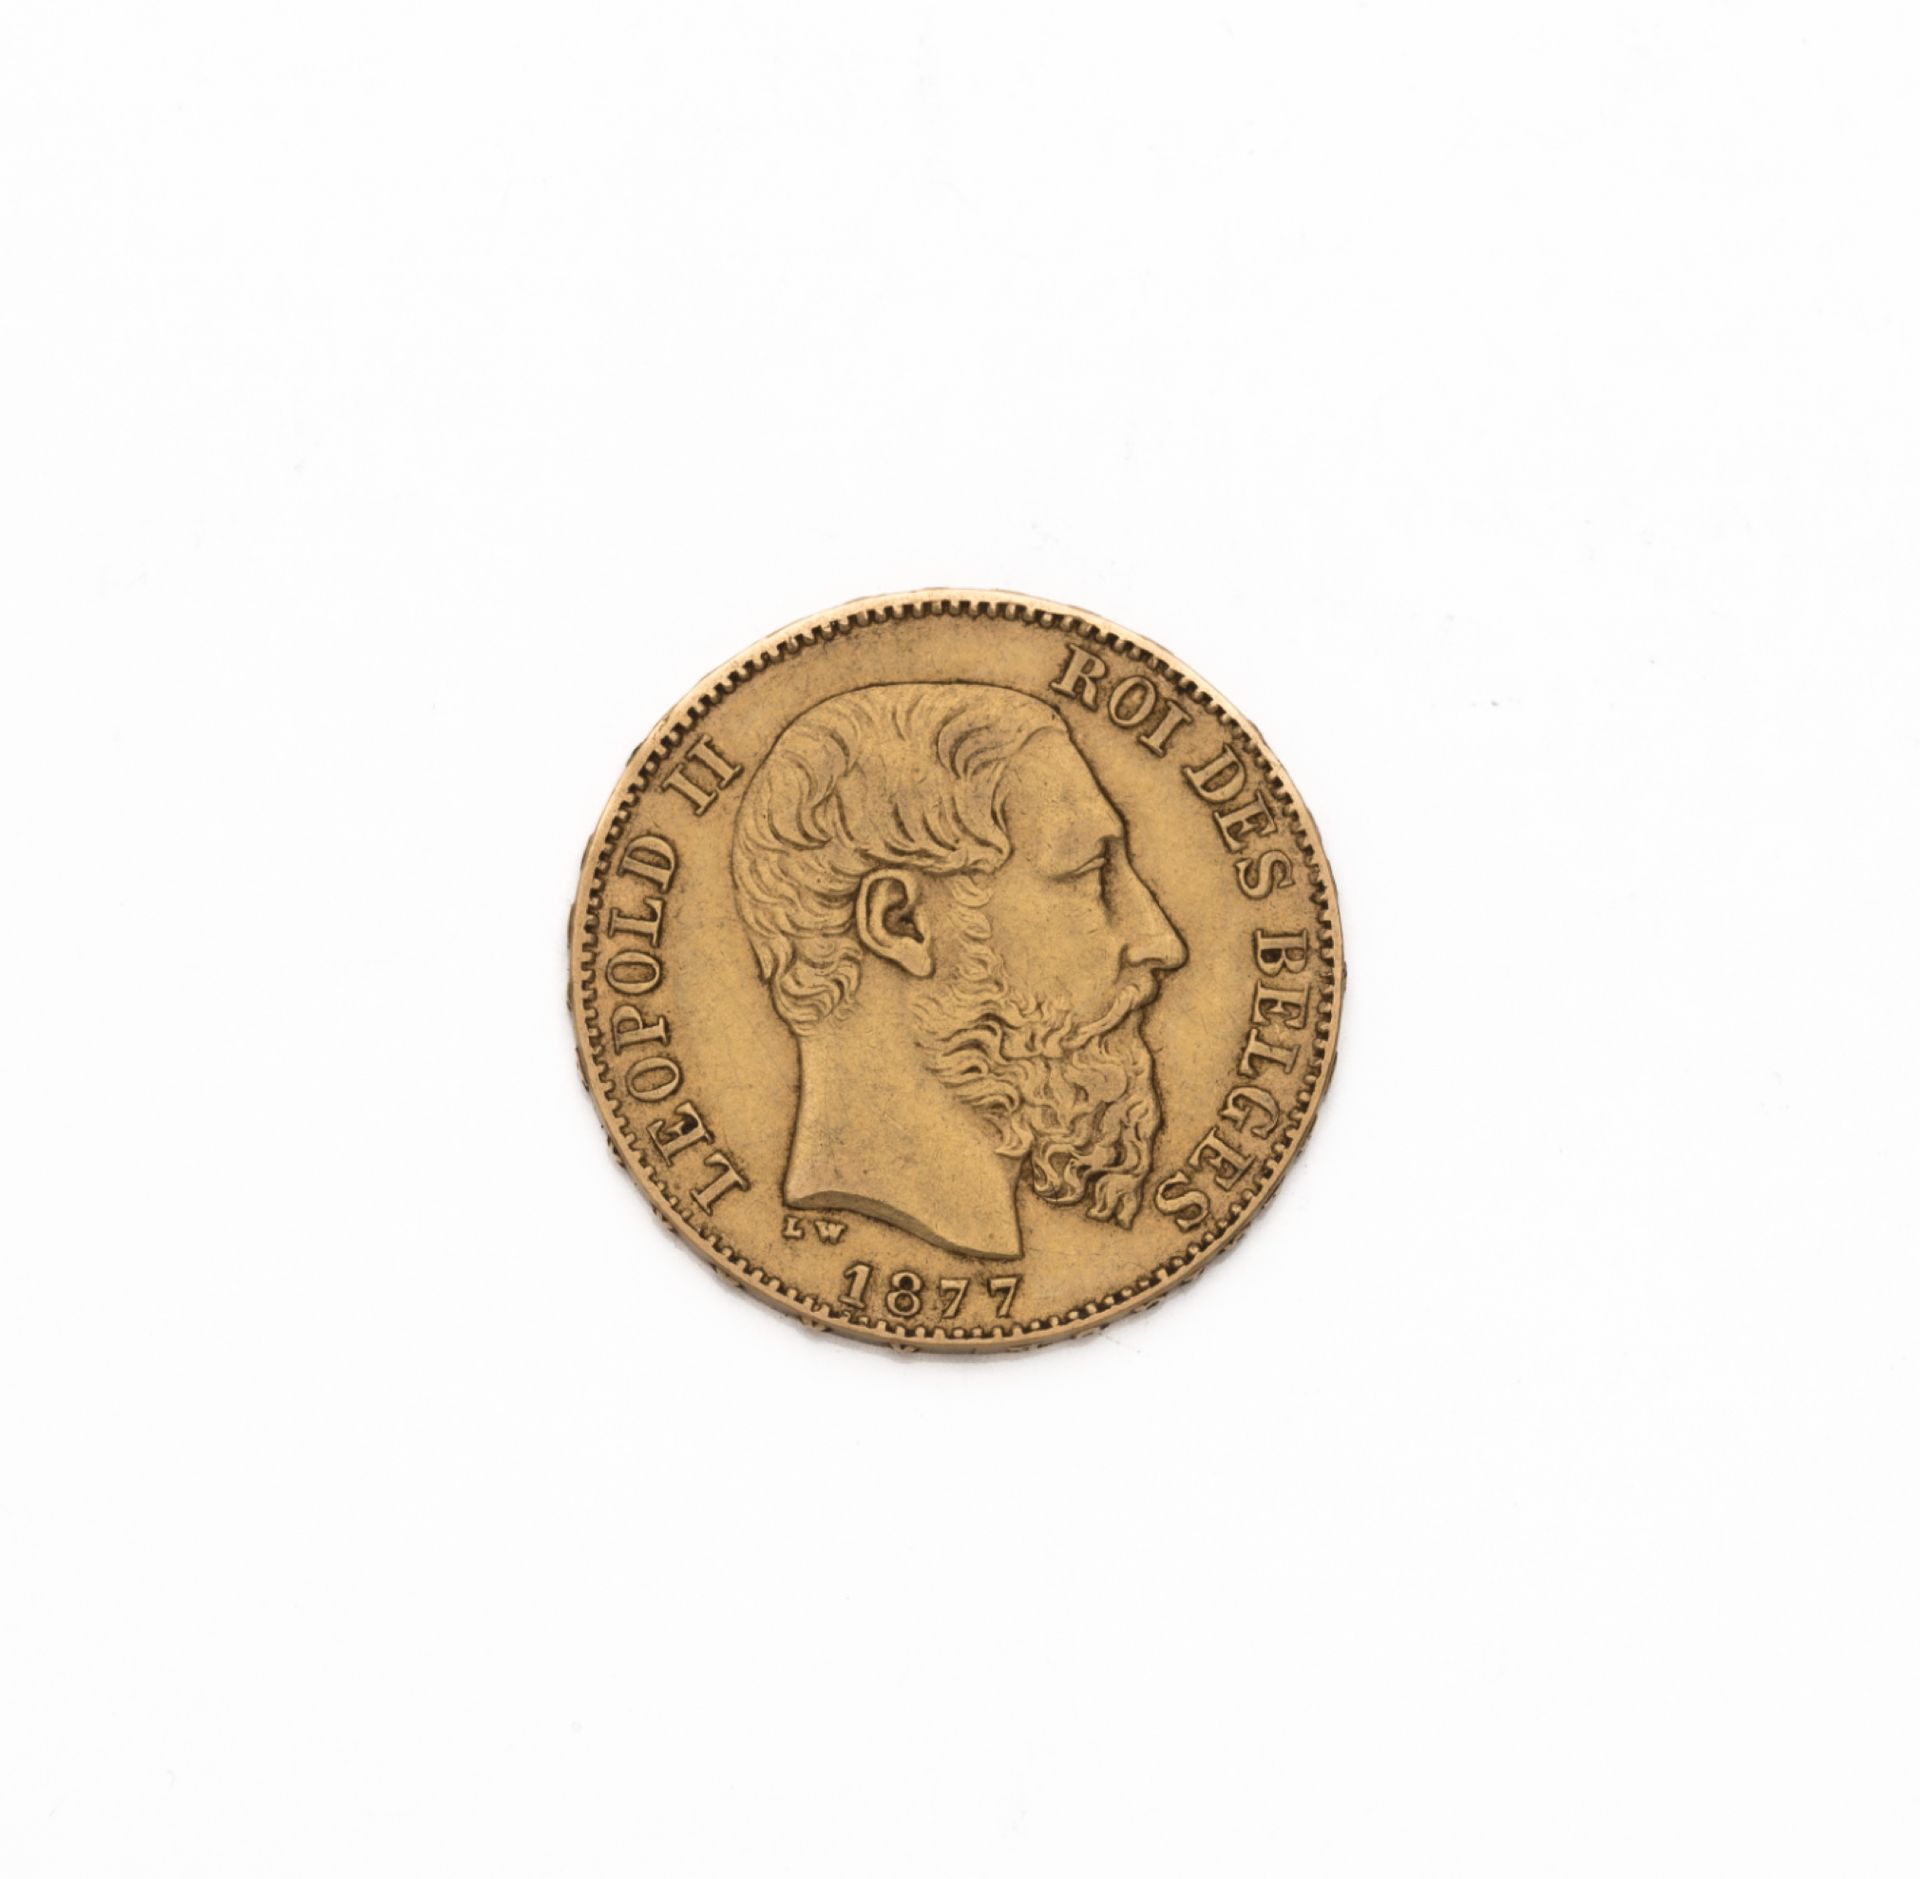 Null BELGIO
20 franchi d'oro, Leopoldo II. 1877 
Peso: 6,4 g